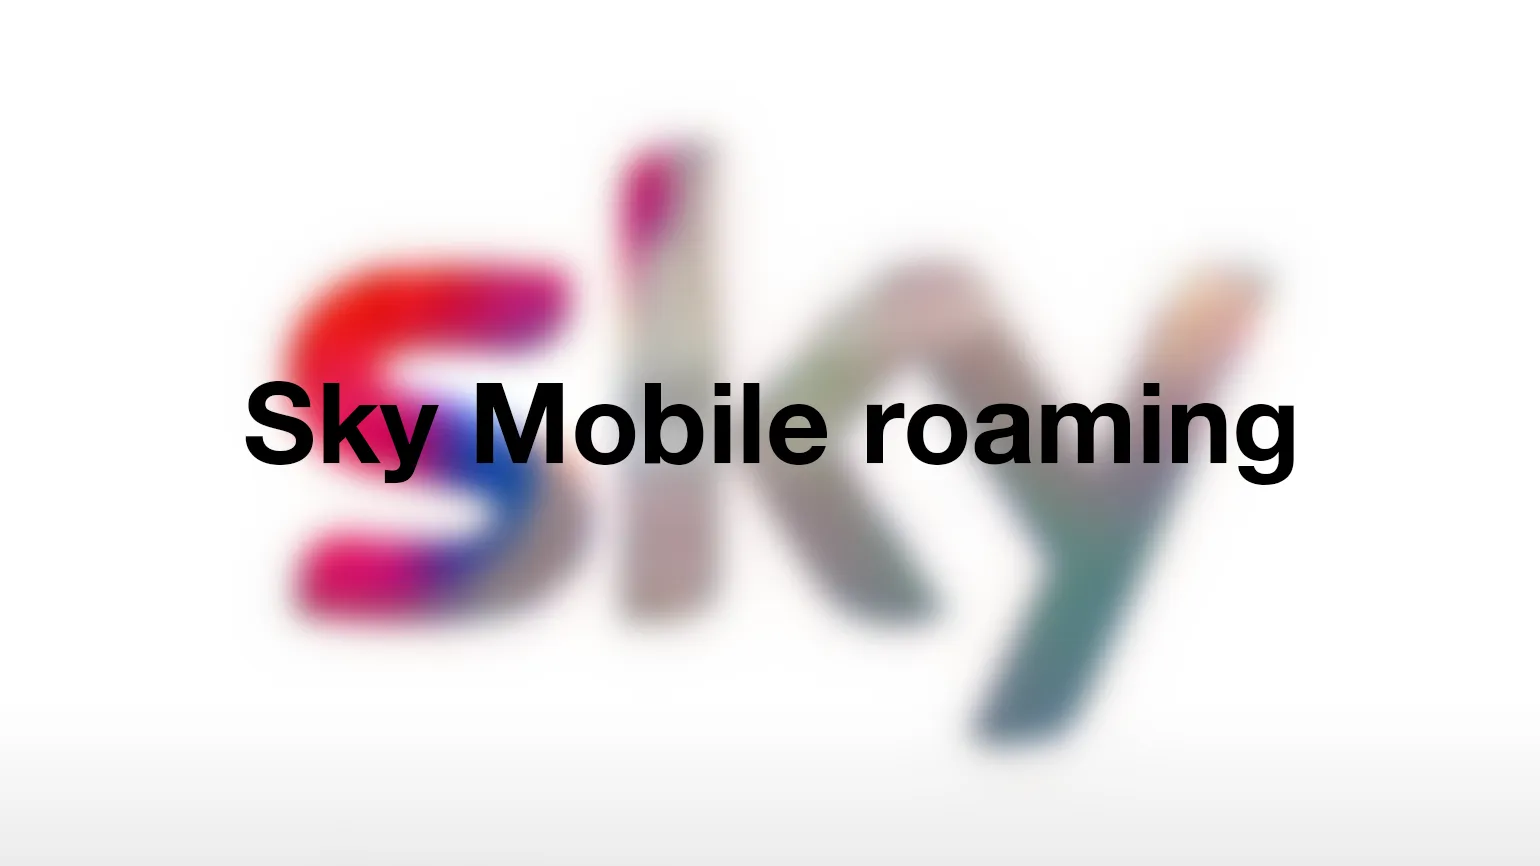 Sky Mobile roaming - International roaming with Sky Mobile explained